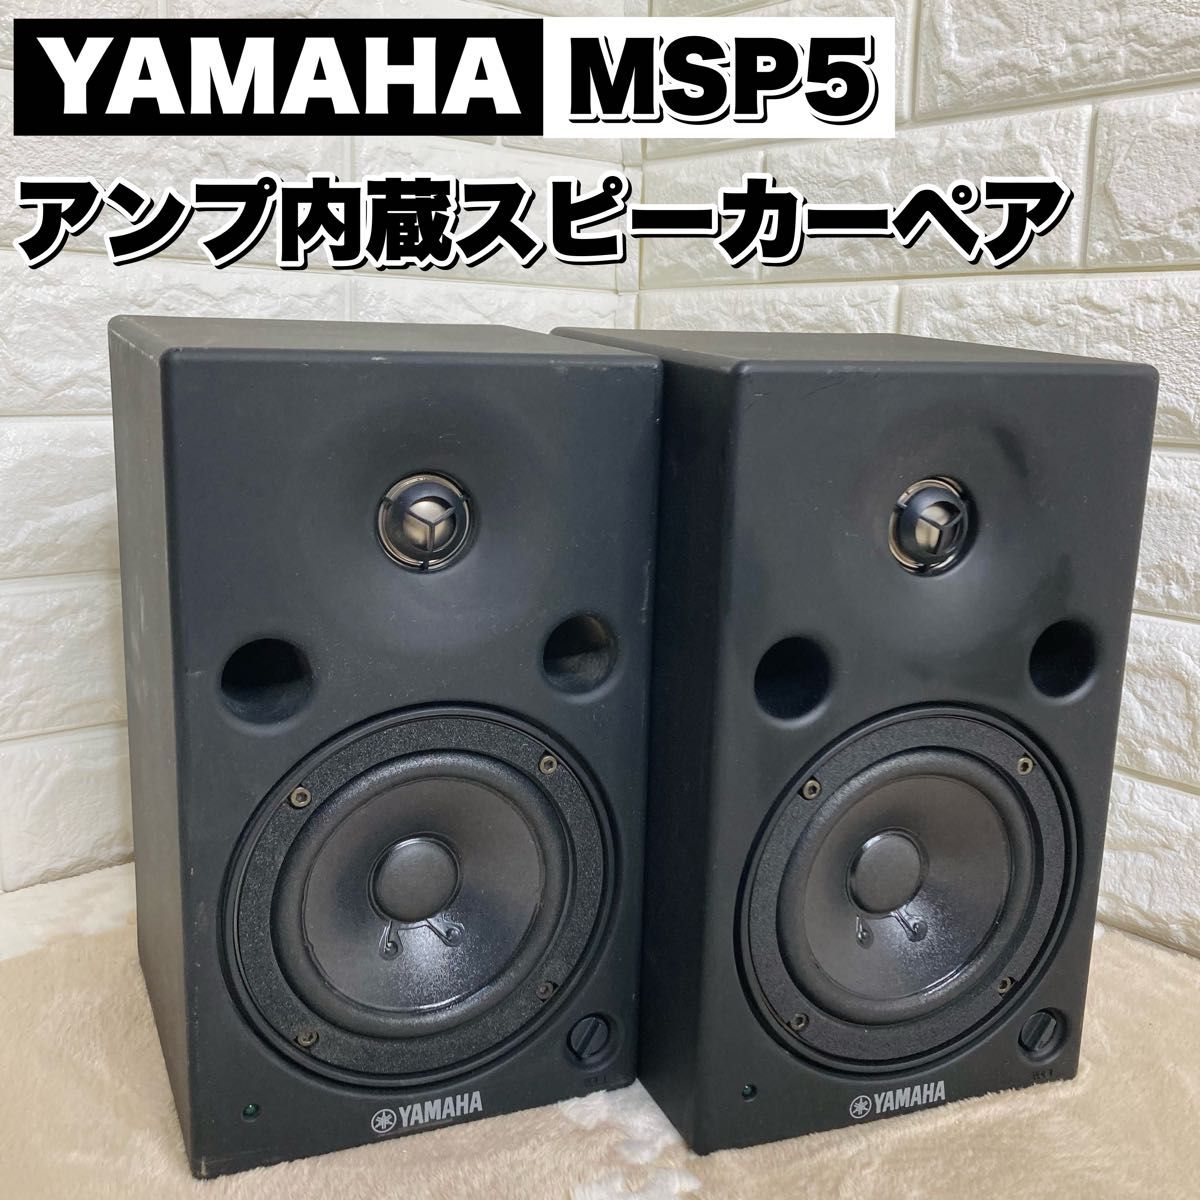 YAMAHA MSP5 Studio モニタースピーカー 生産終了品 - スピーカー